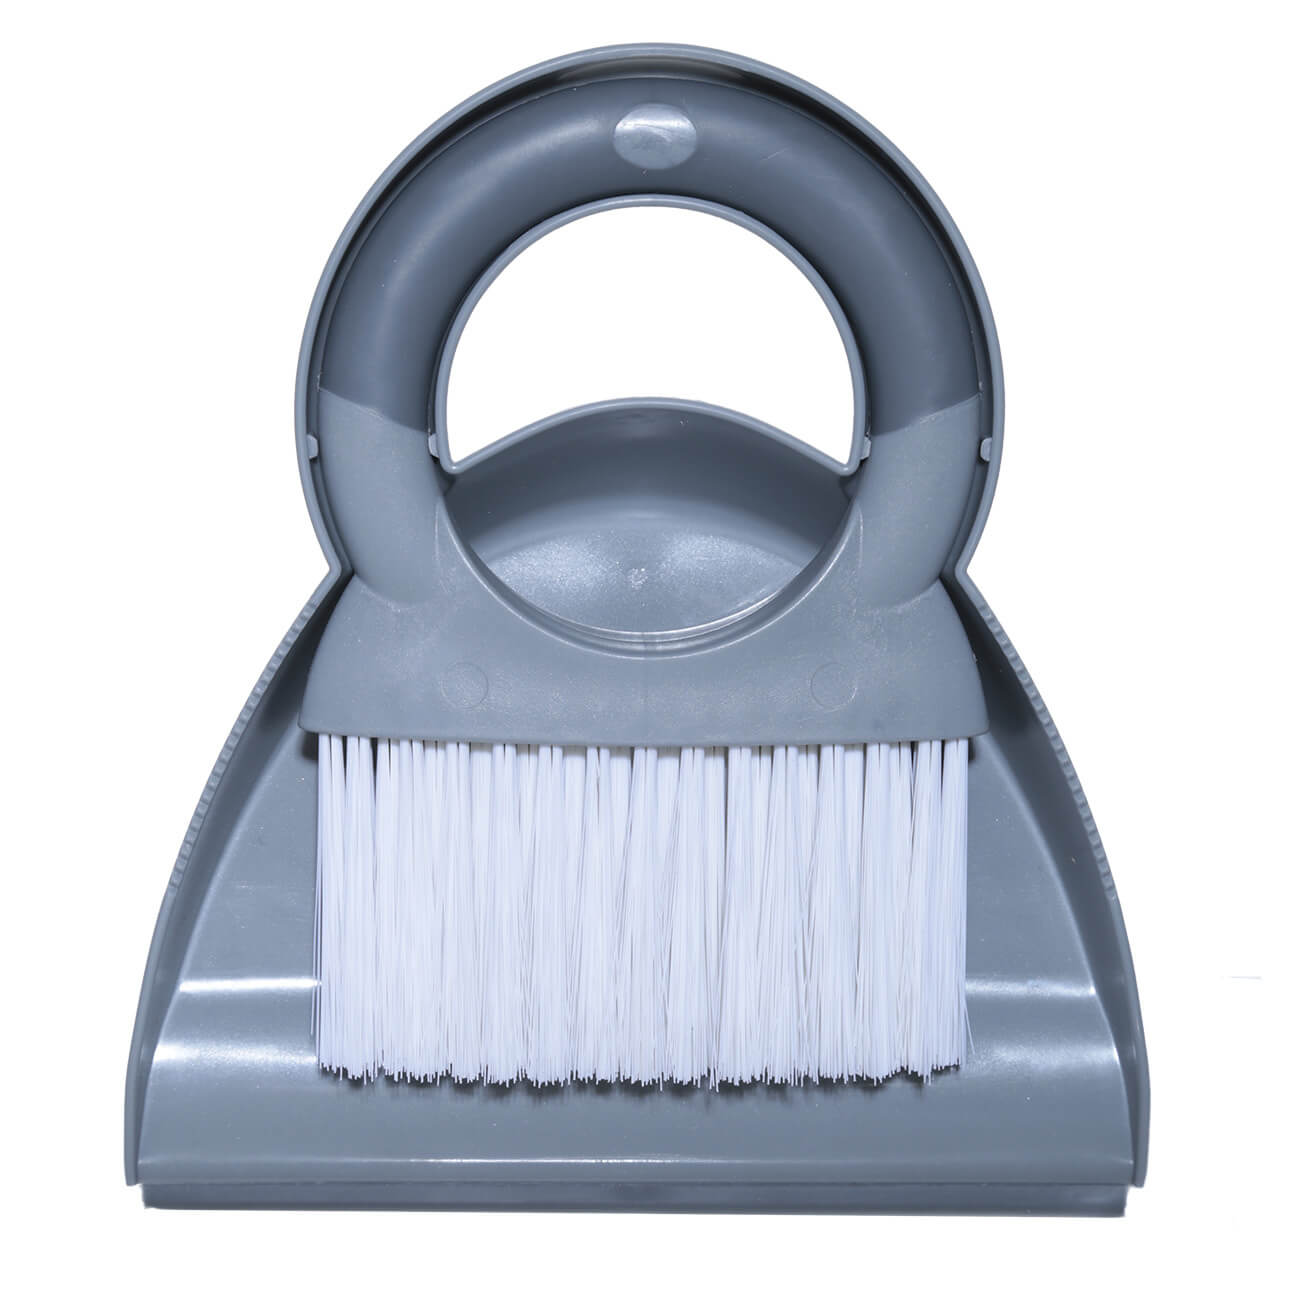 Garbage brush, with dustpan, 21 cm, Plastic, round handle, Grey, Clean изображение № 1